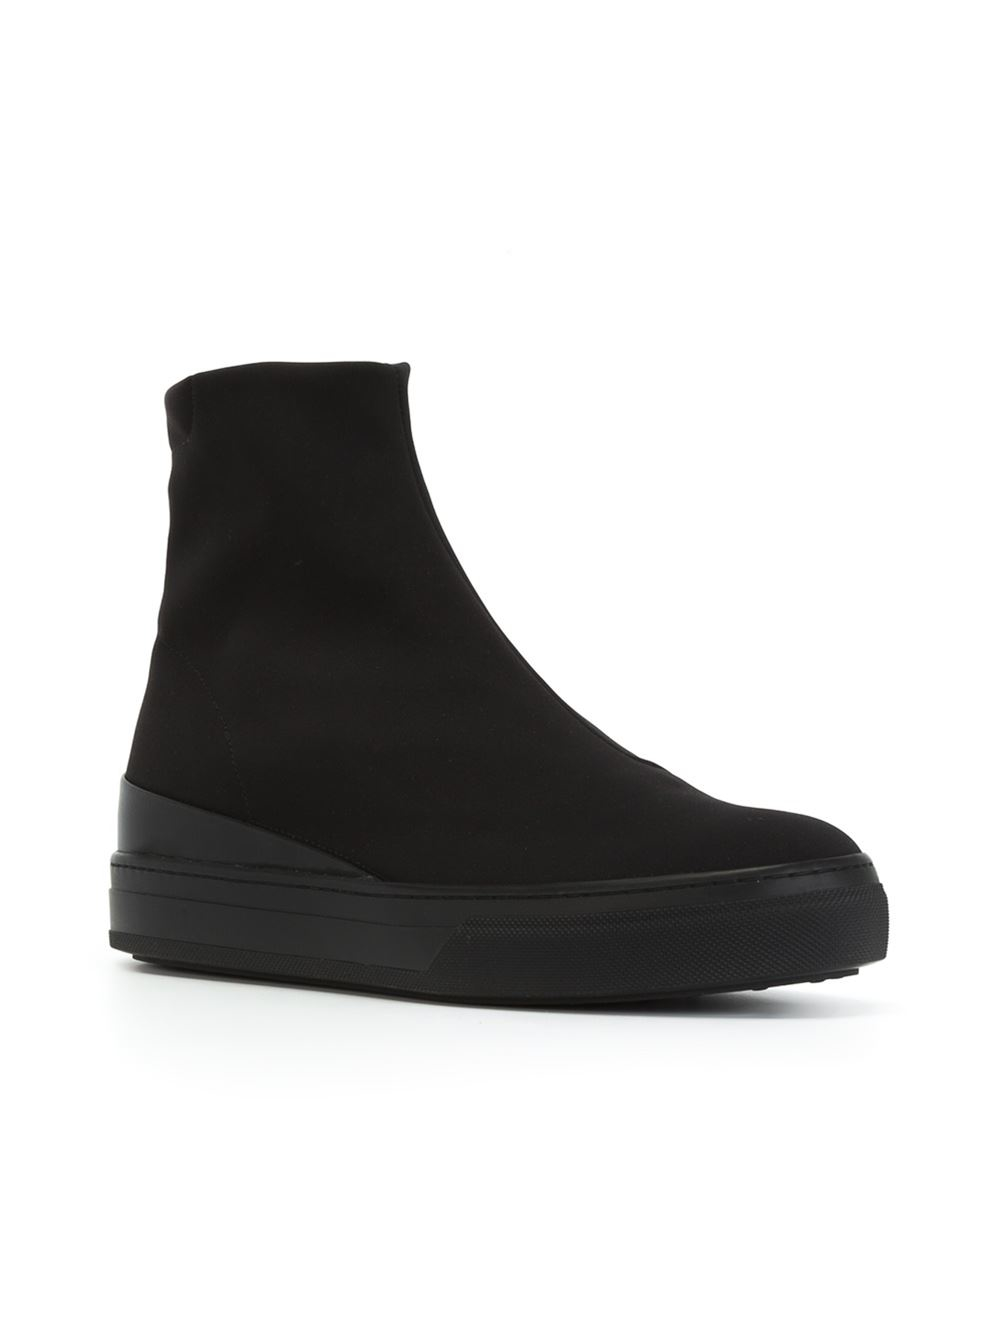 black rubber sole boots